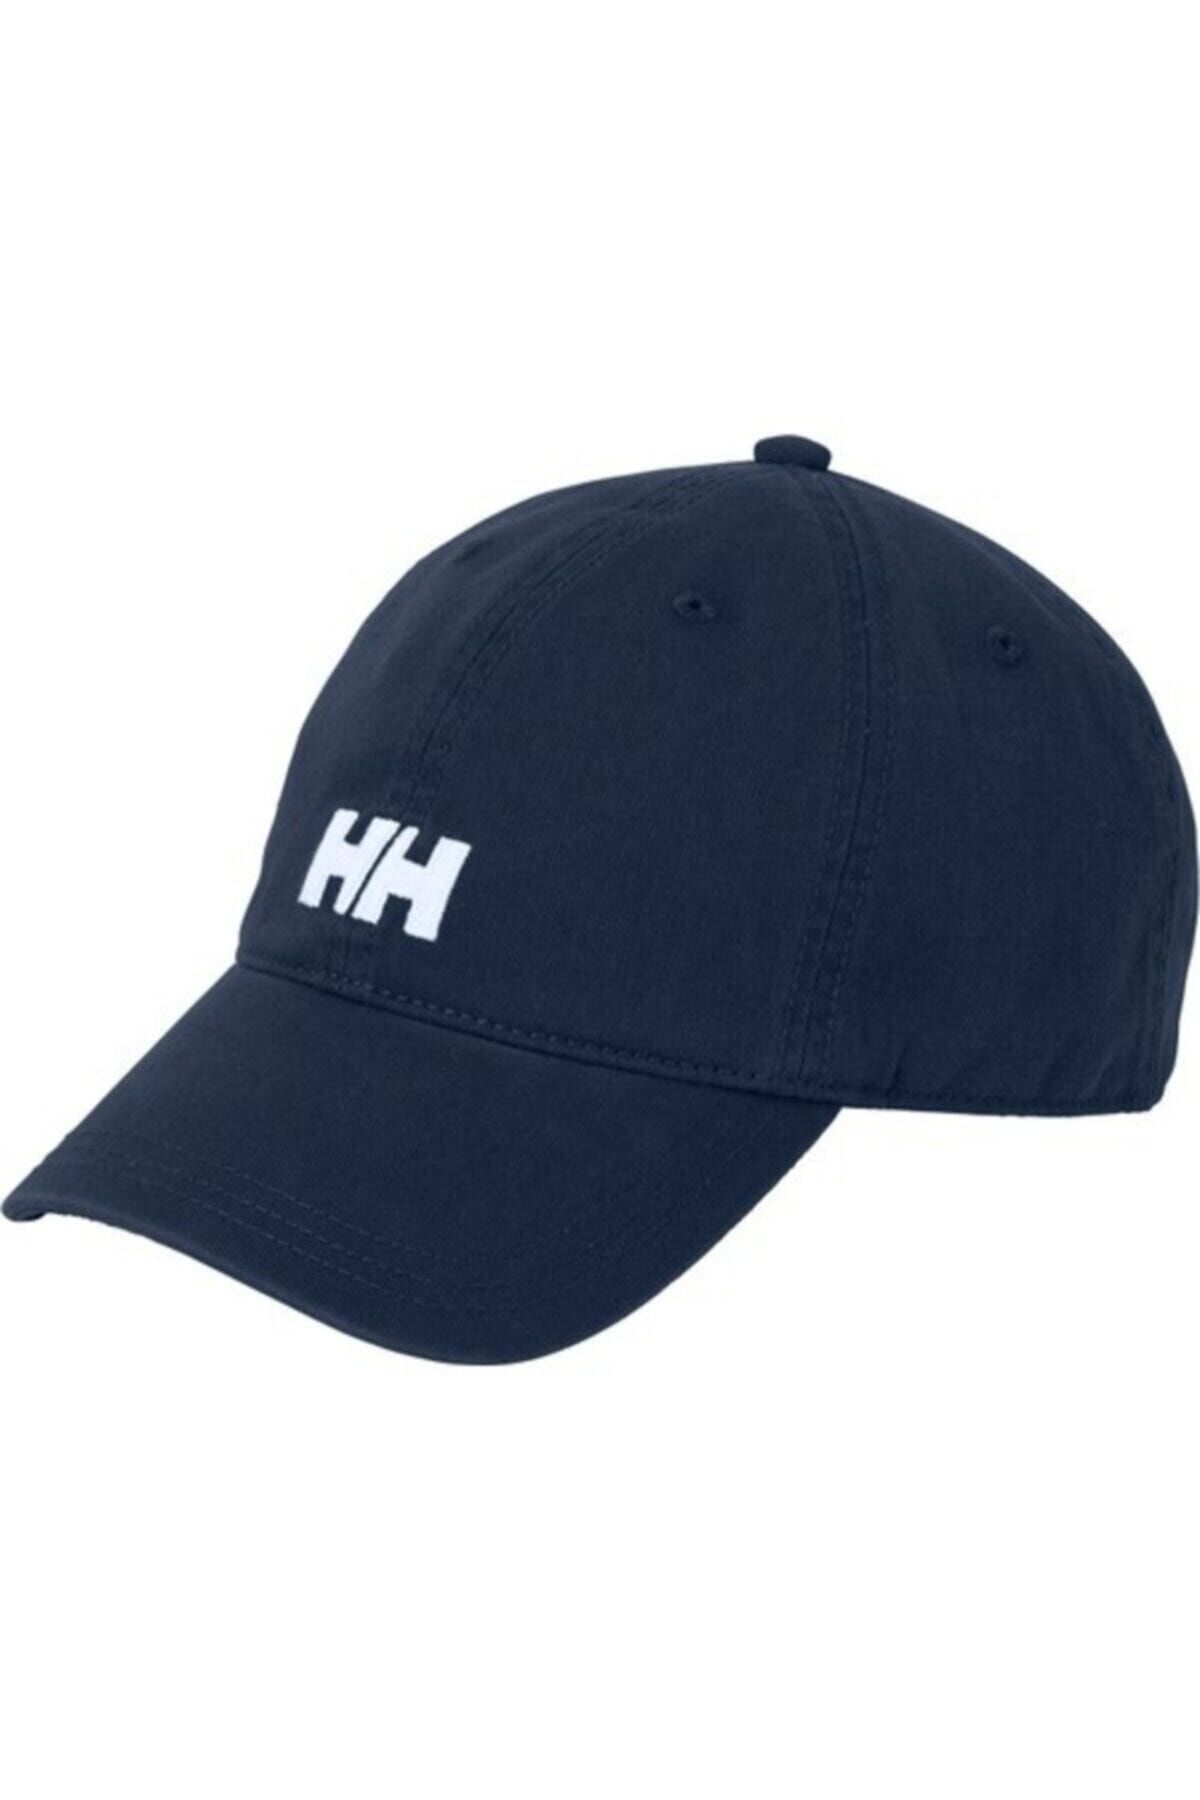 Helly Hansen Hh Logo Cap Kadın Erkek Şapka Lacivert